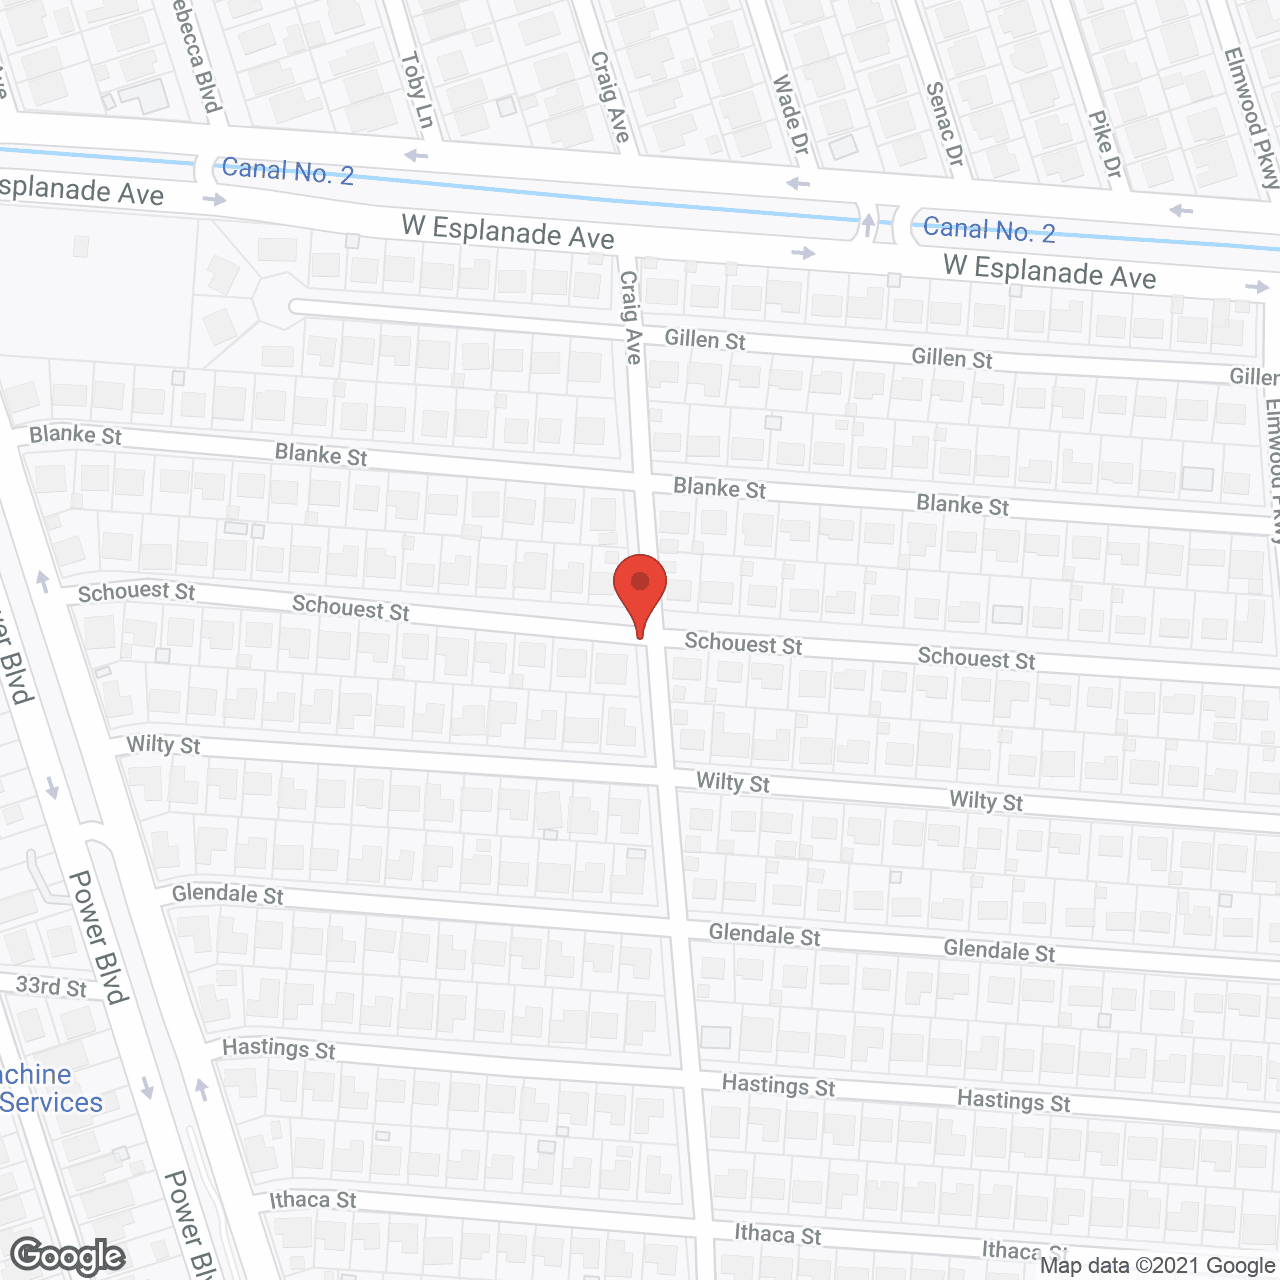 Schouest House in google map